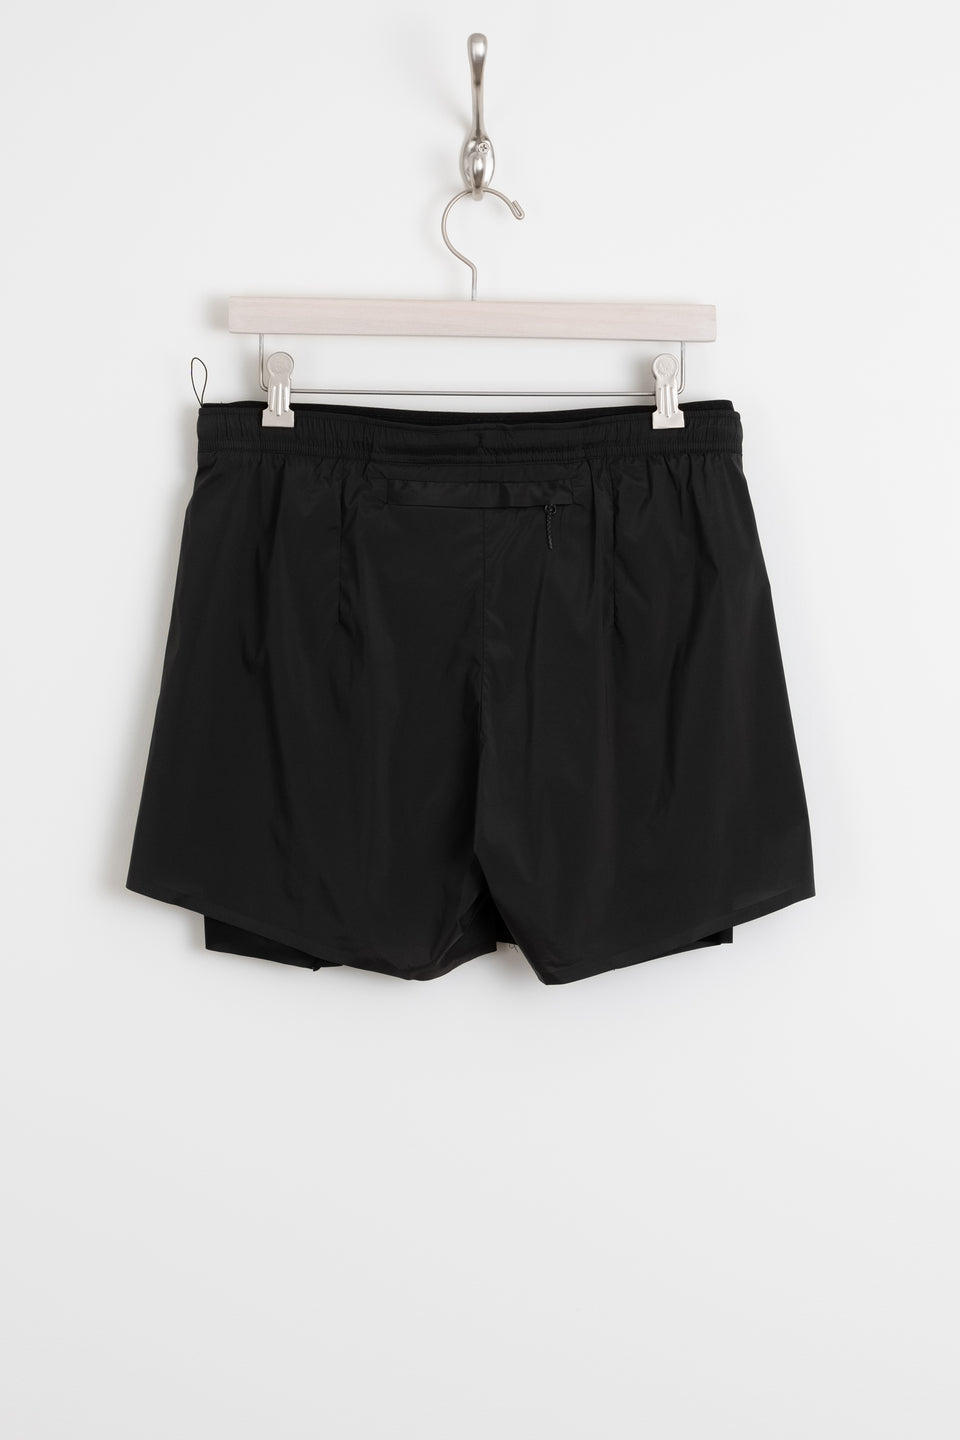 SATISFY men's running apparel France TechSilk™ 5" Shorts Black Calculus online shop Canada